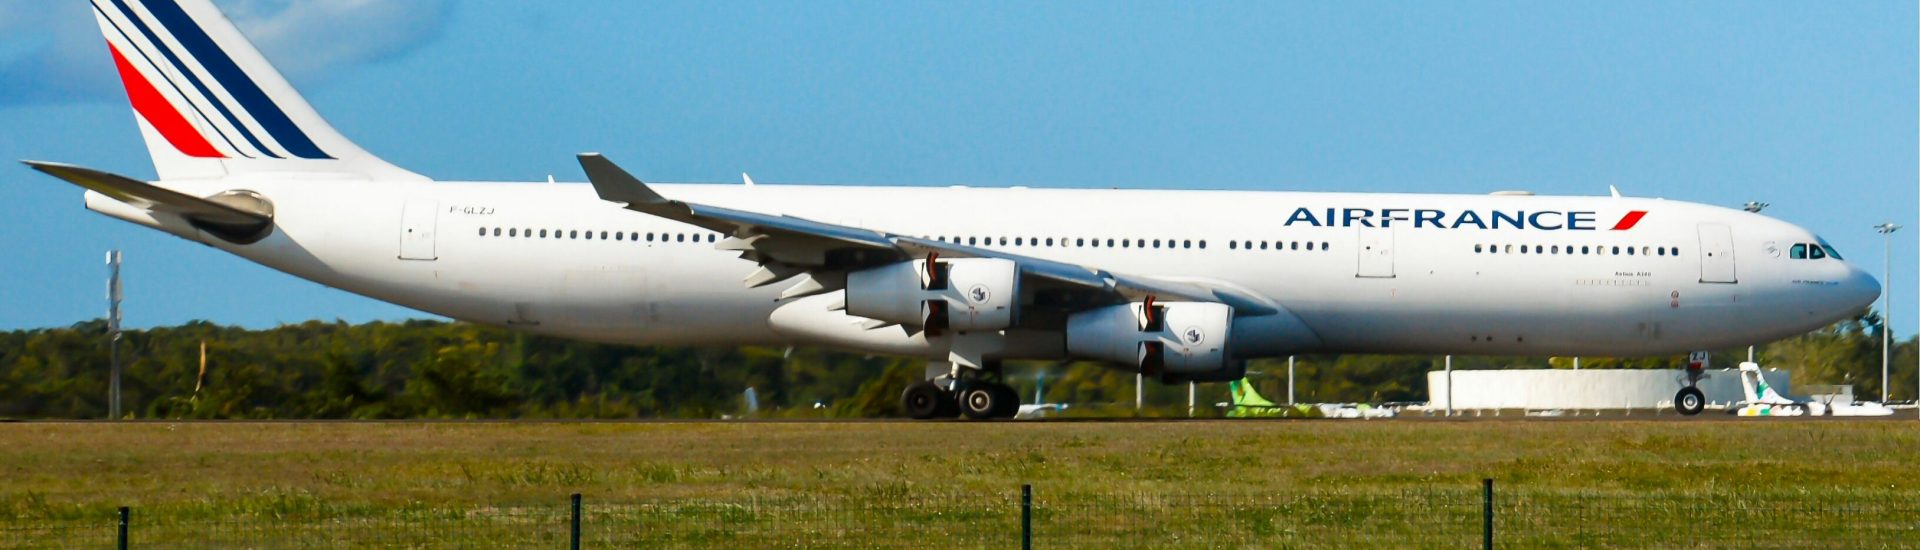 A340-300 Air France F-GLZJ